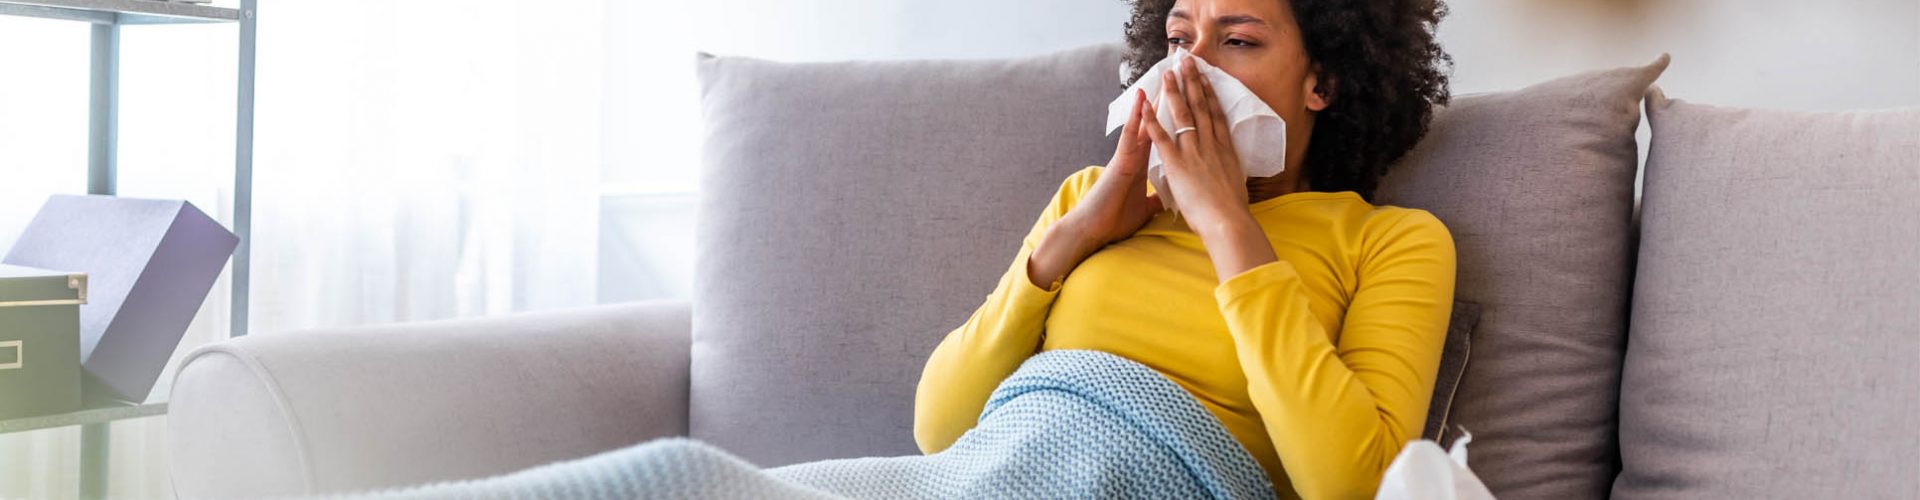 woman-flu-sneeze-tissue